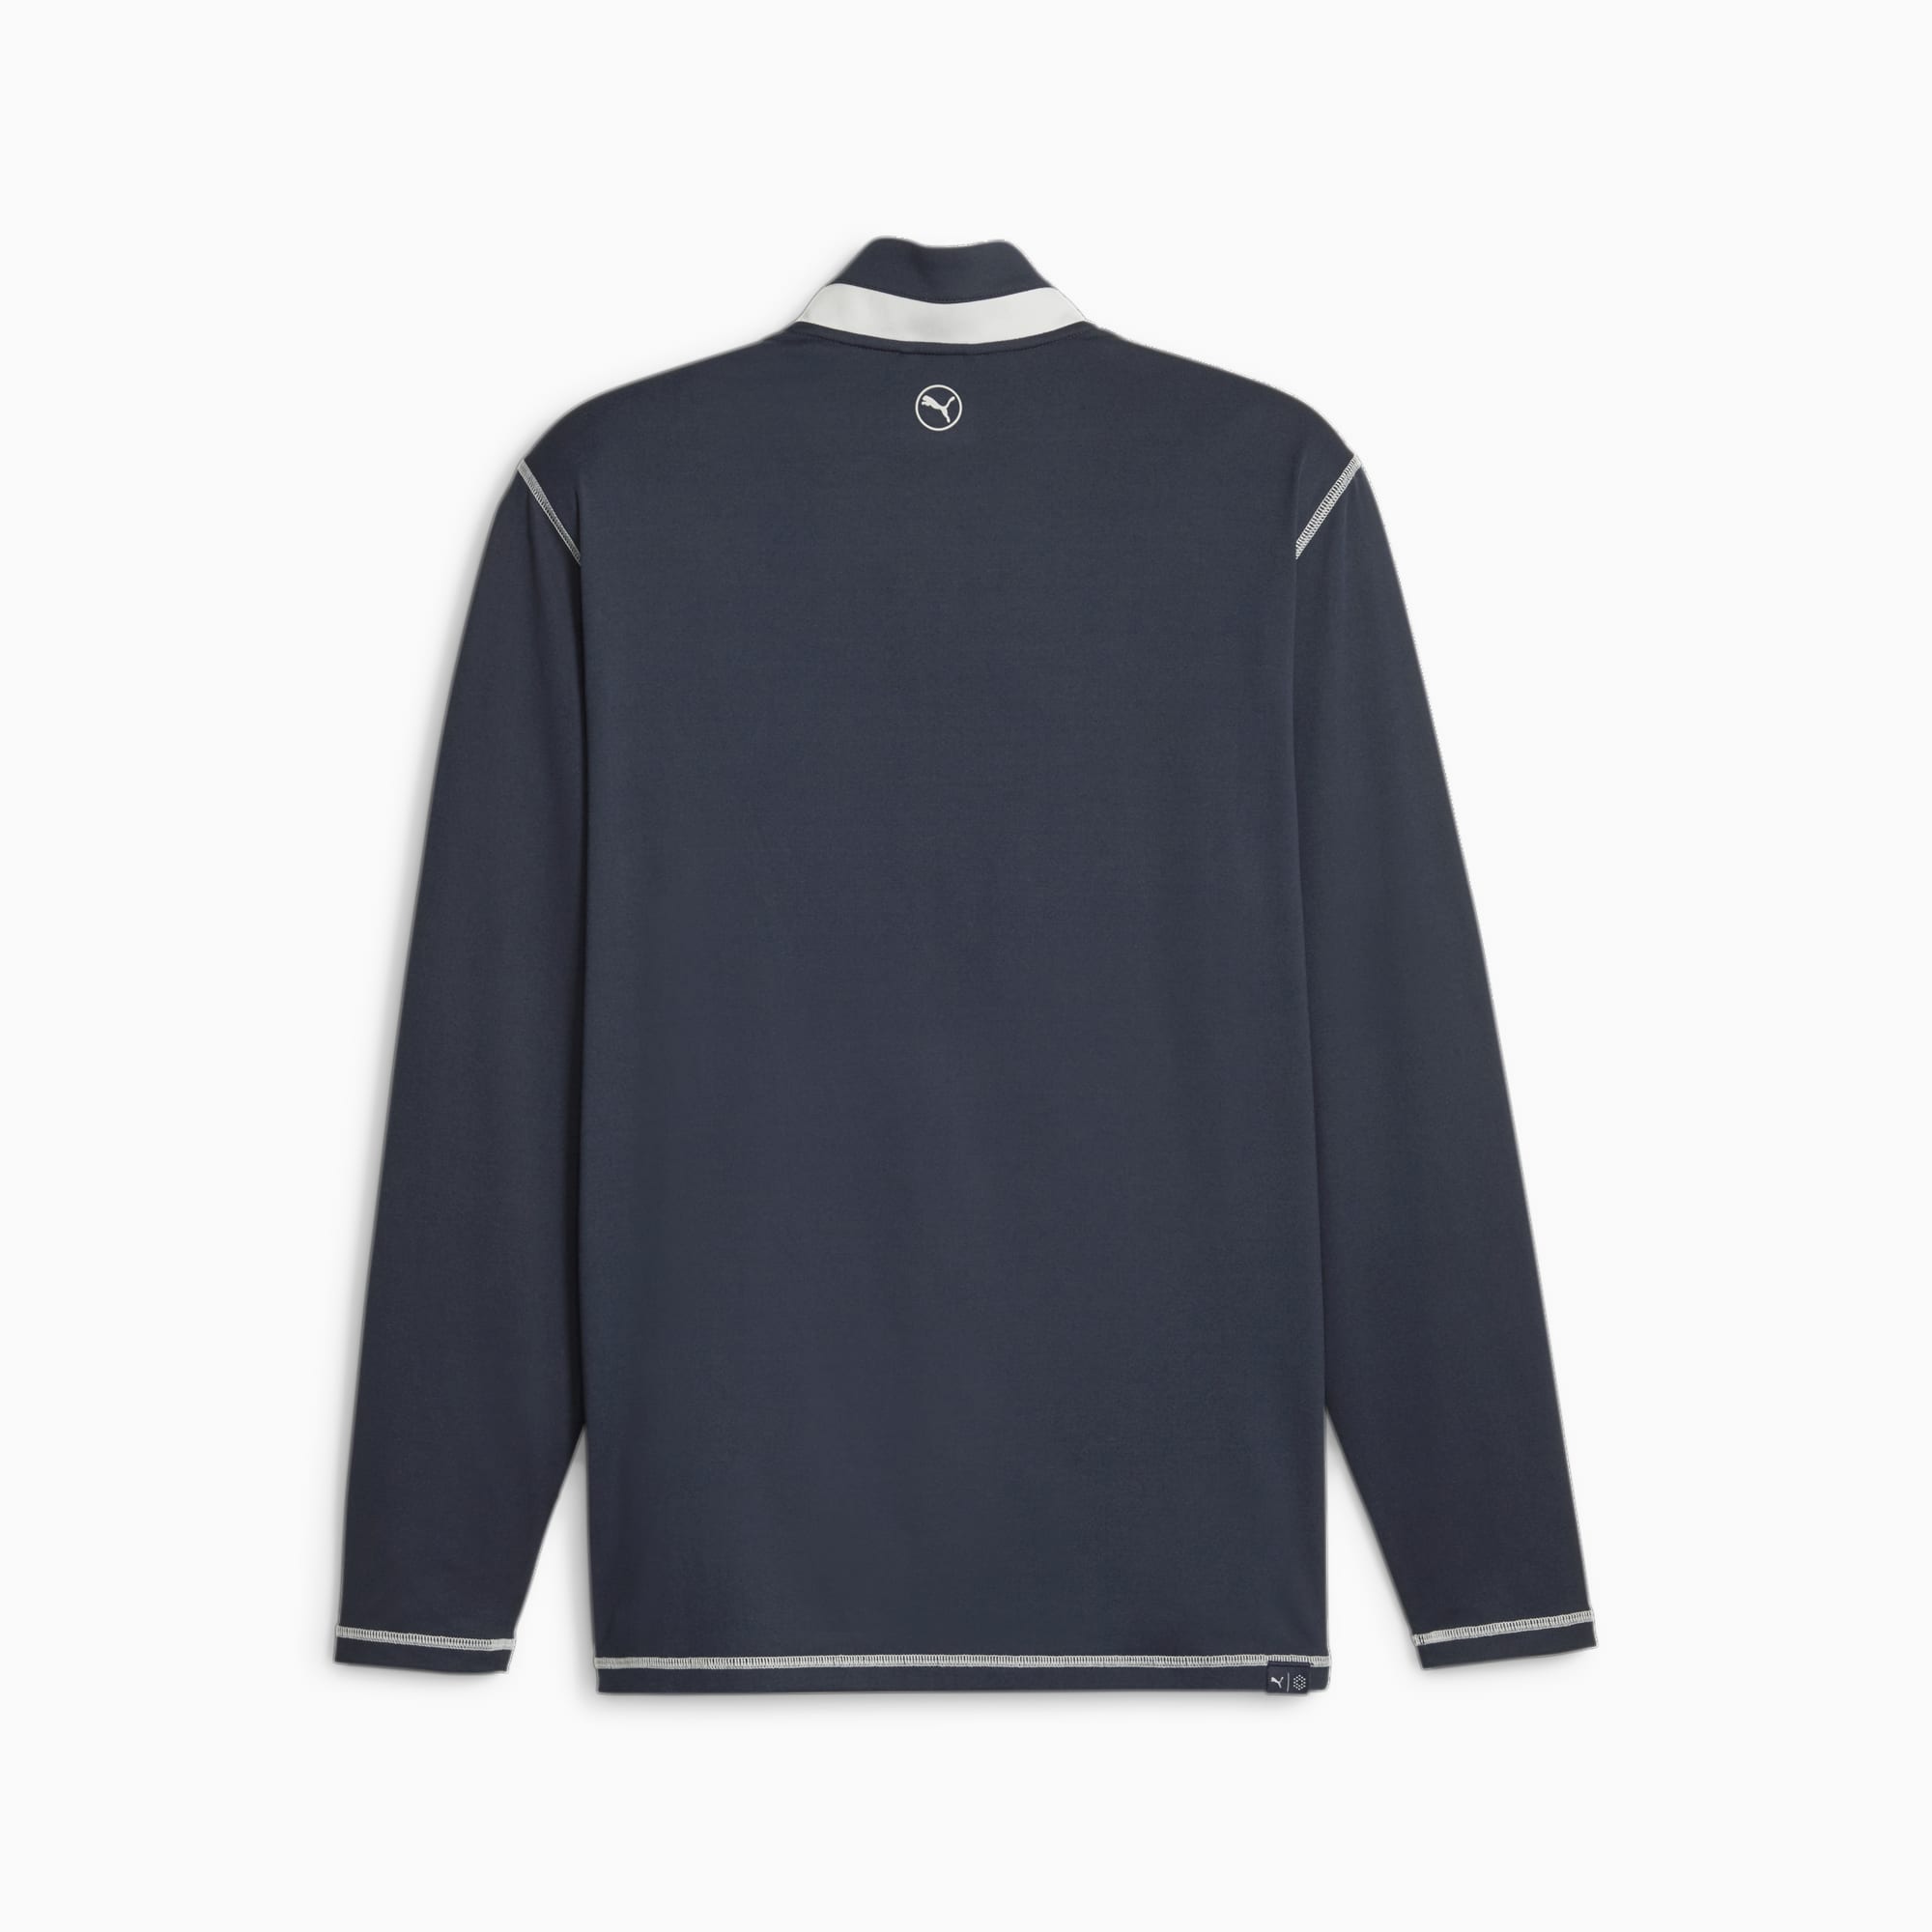 PUMA Men's Lightweight Golf Pullover Top, Dark Blue, Size S, Clothing